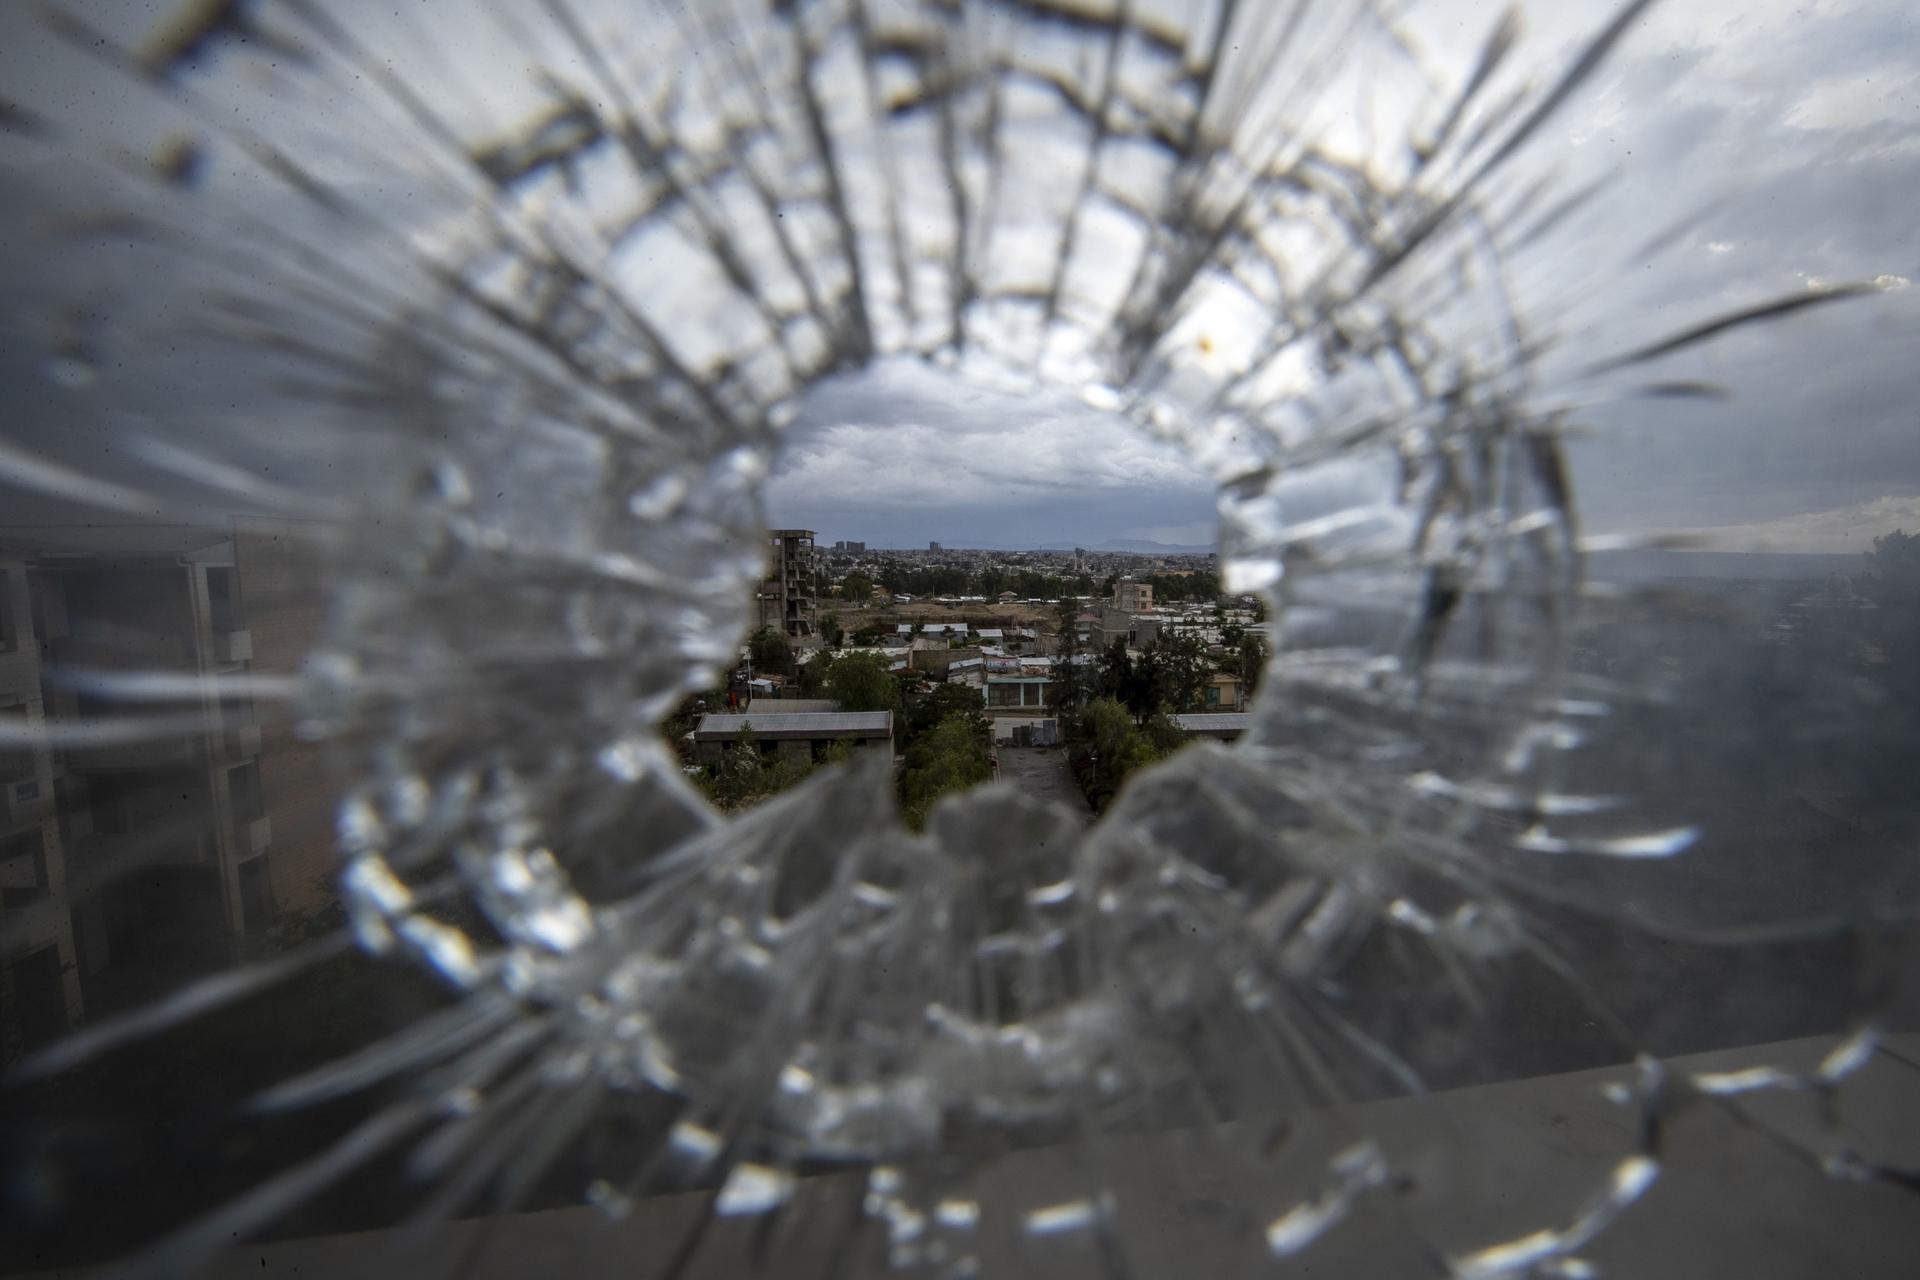 Glass shattered from bullet. 